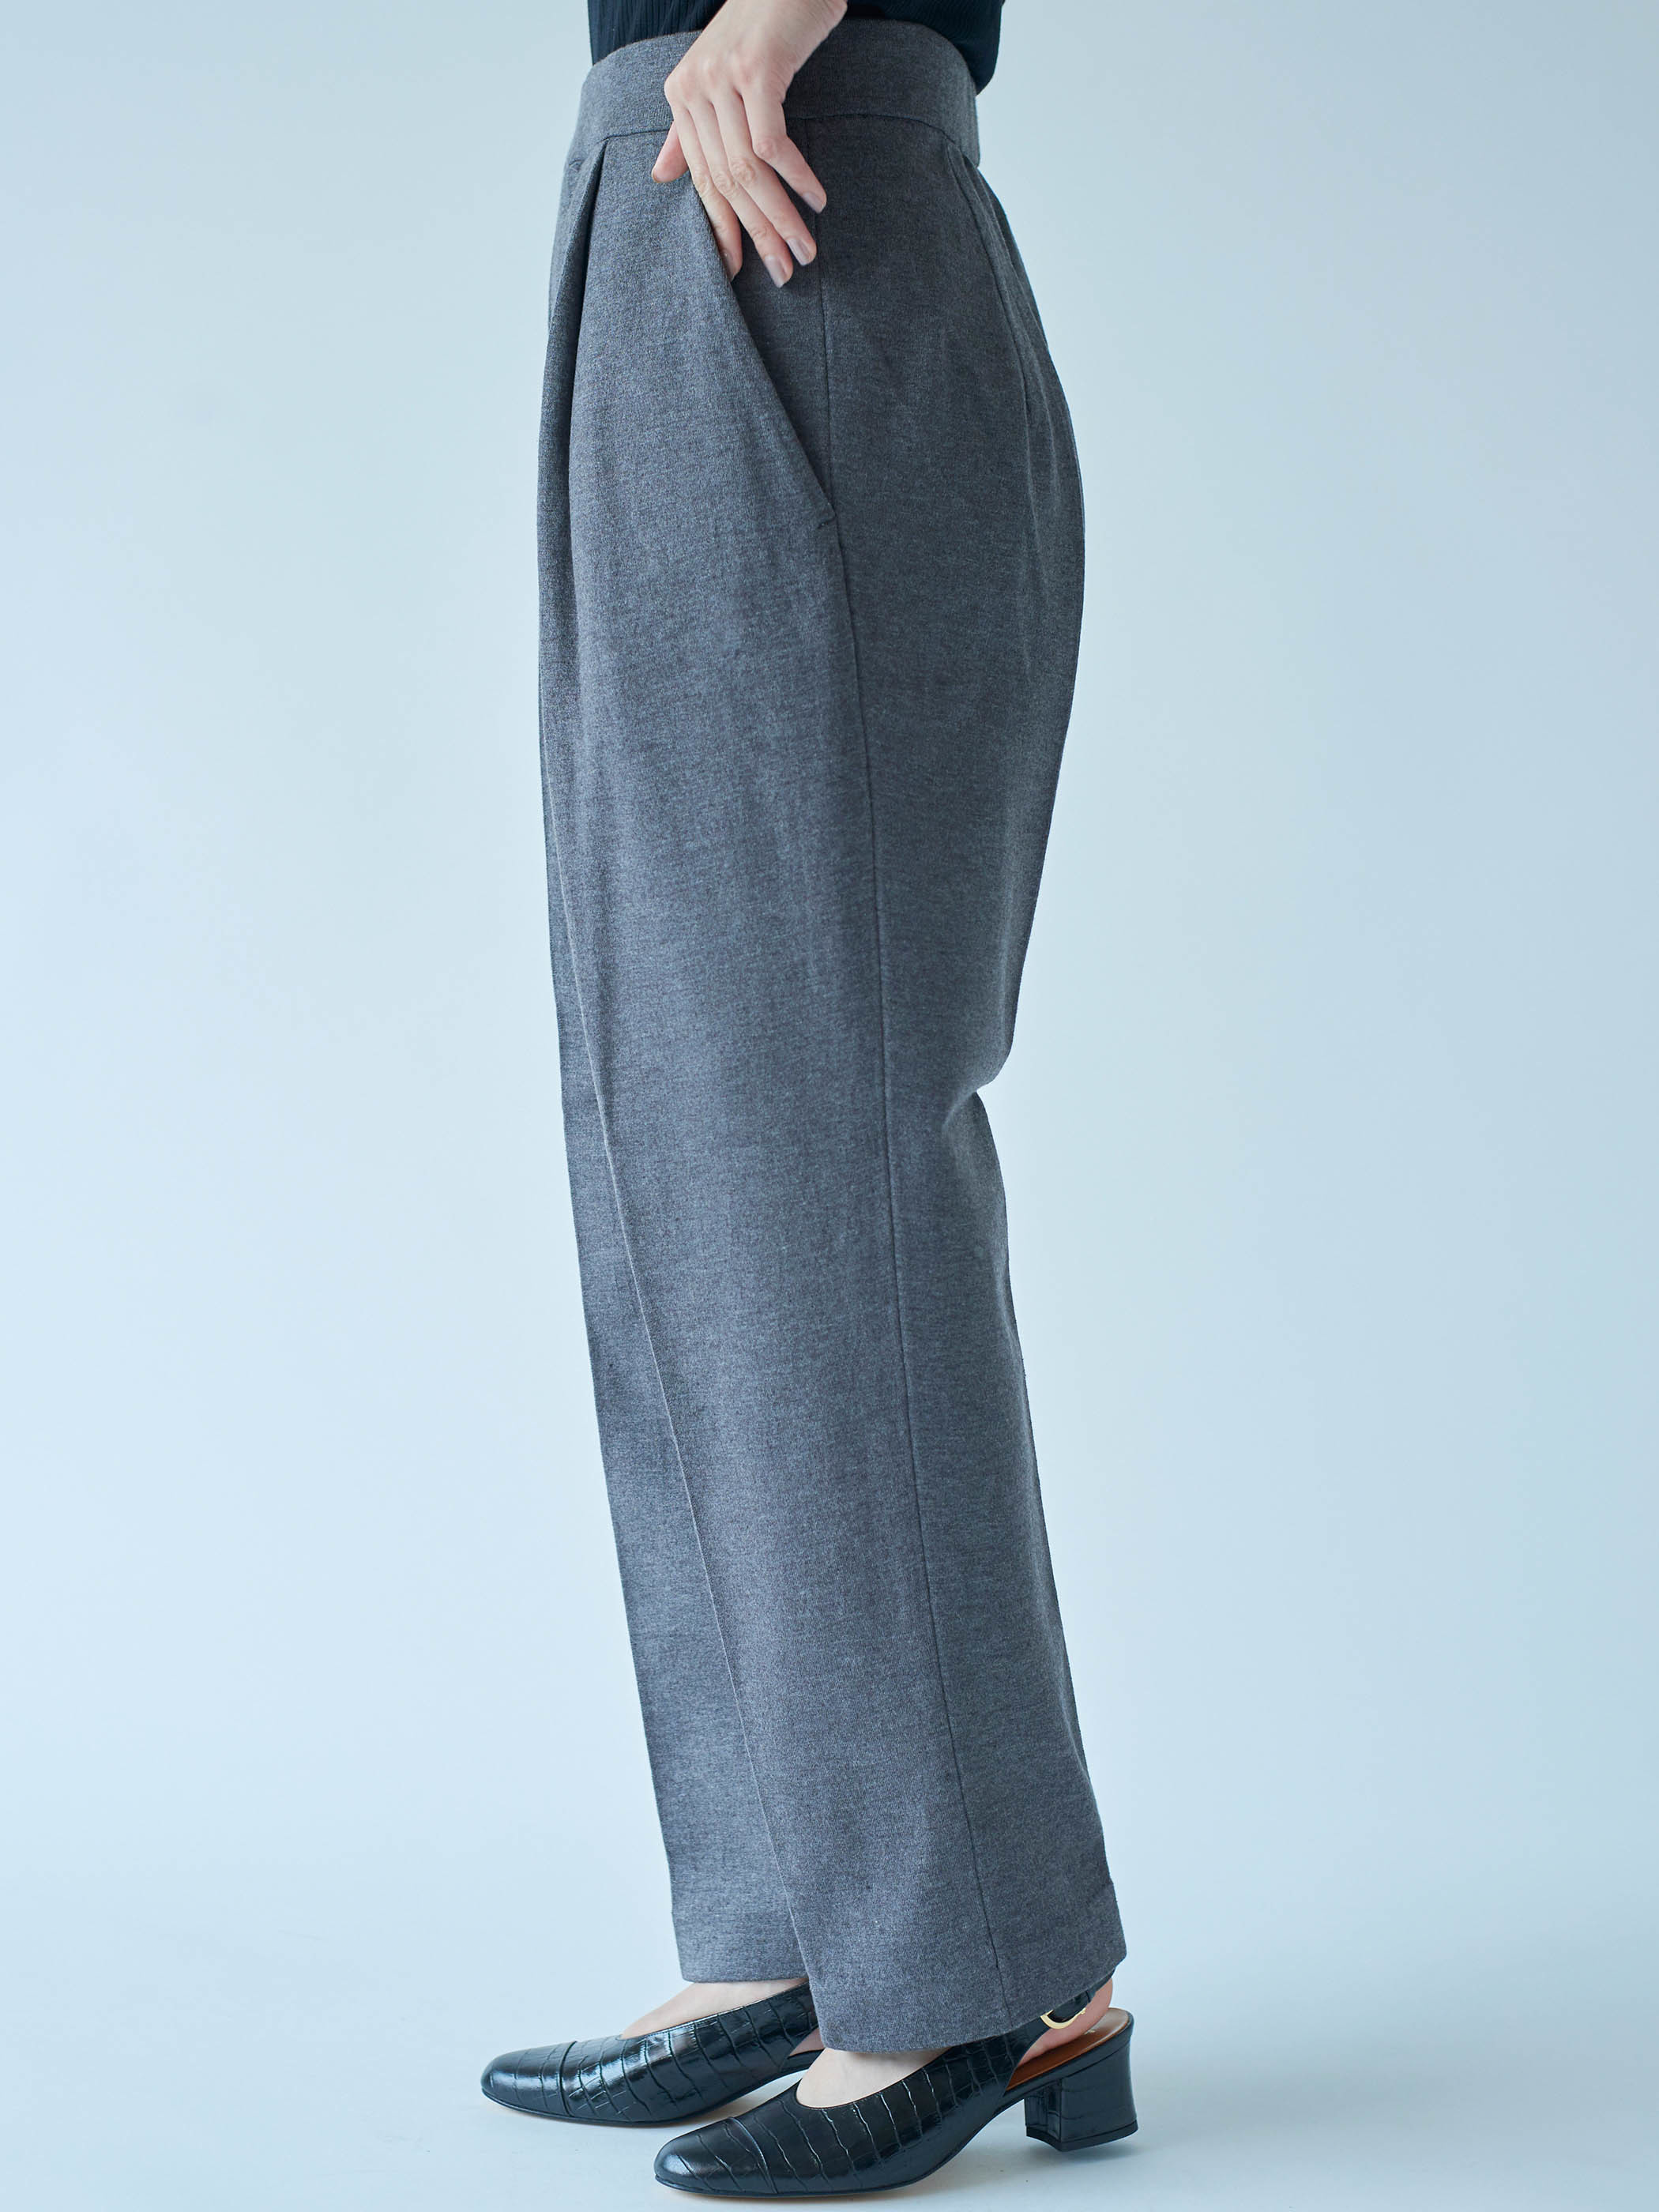 Work Wear collection Women's Tapered Pants Gray(テーパードパンツ・グレー)